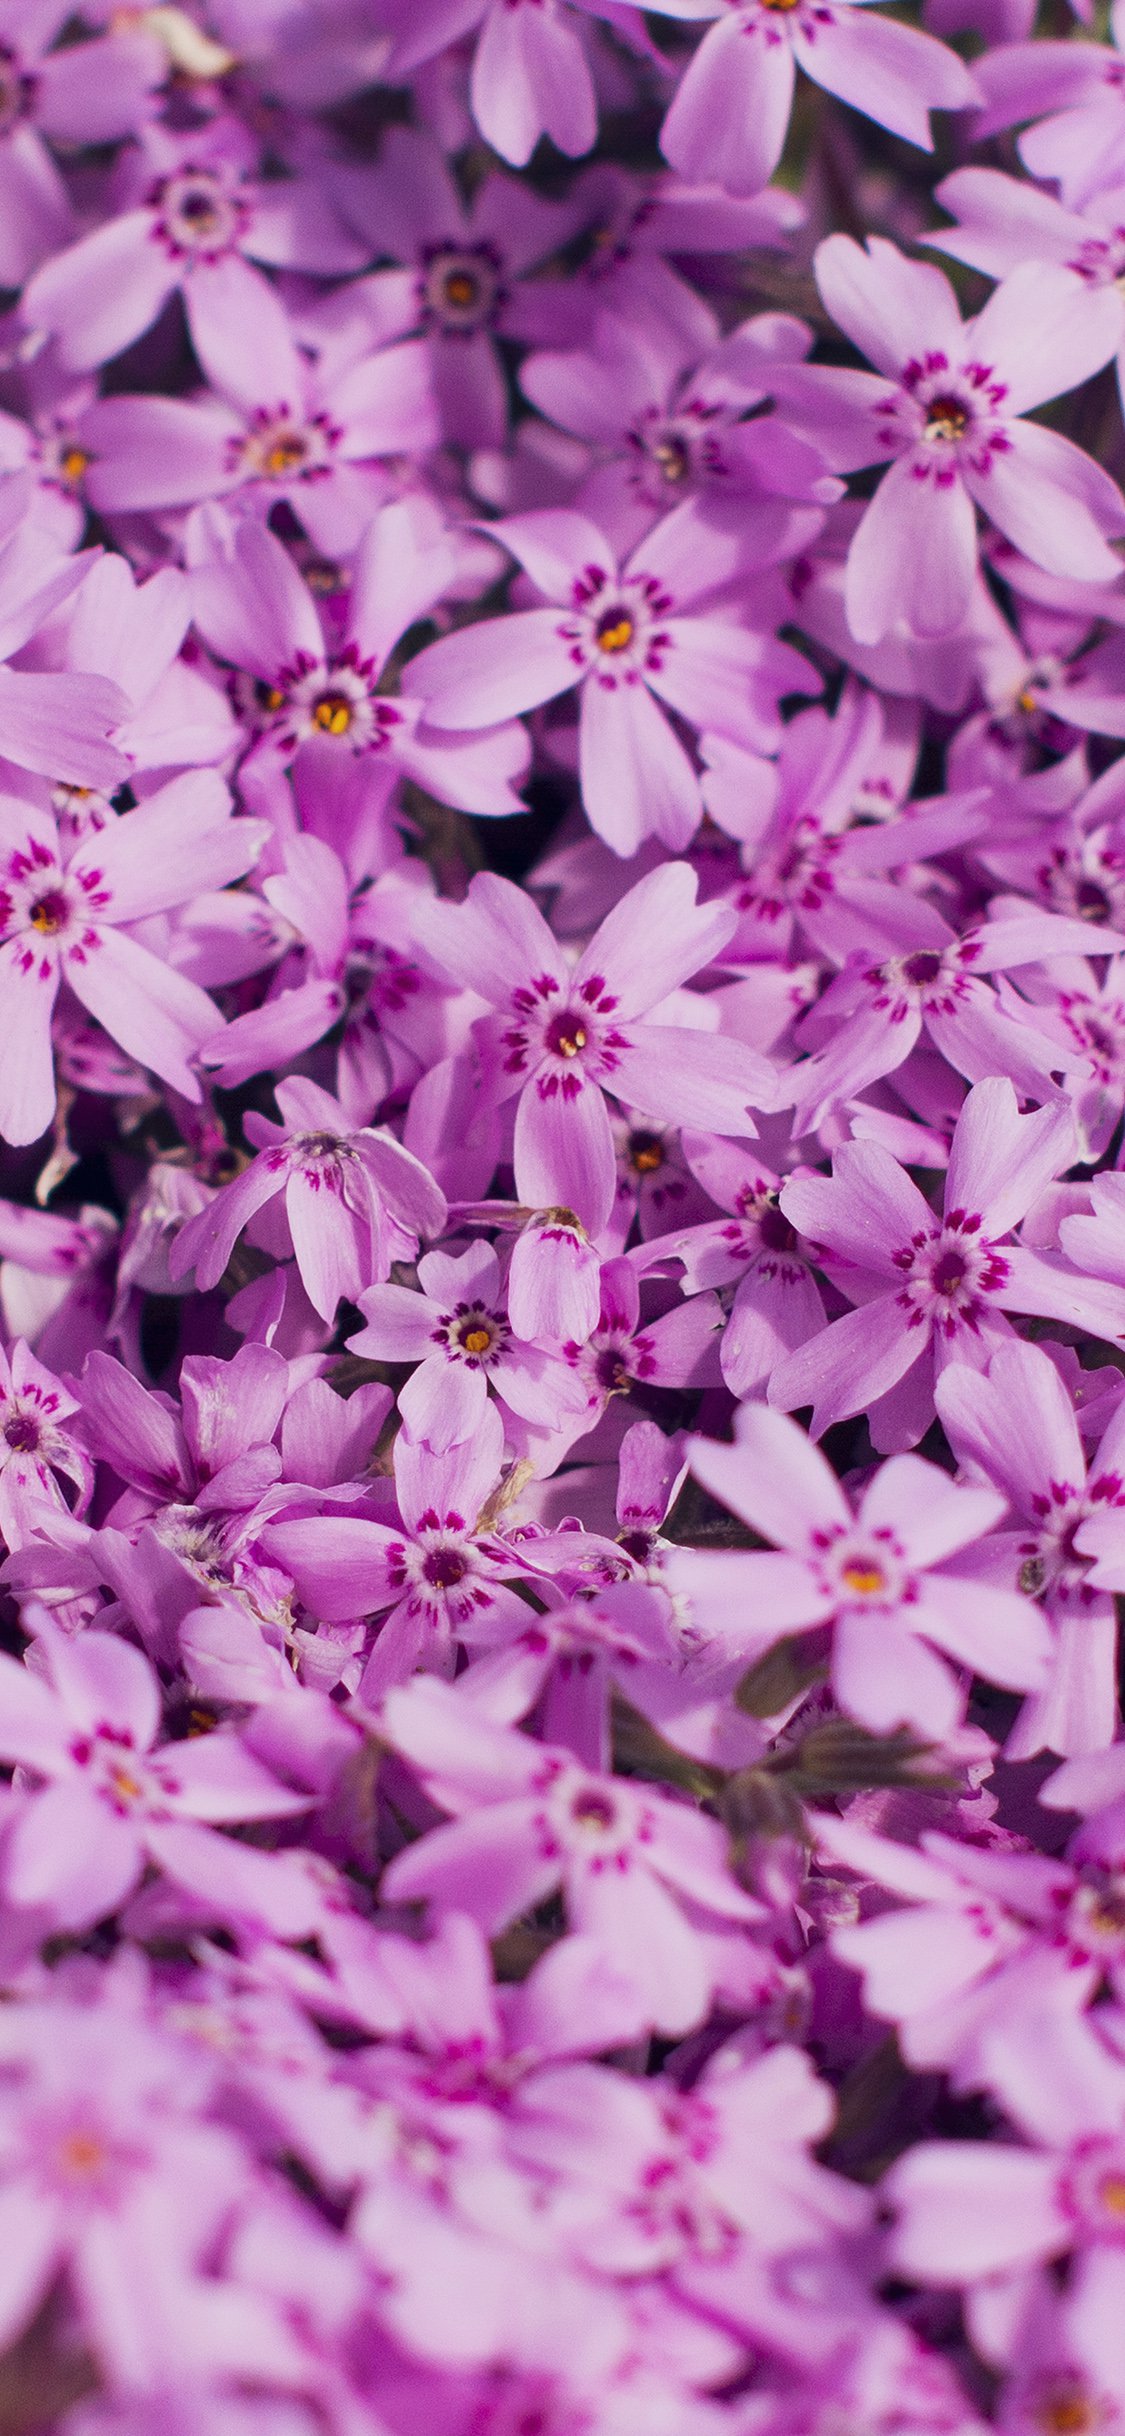 Violet flower iPhone X Wallpaper Free Download